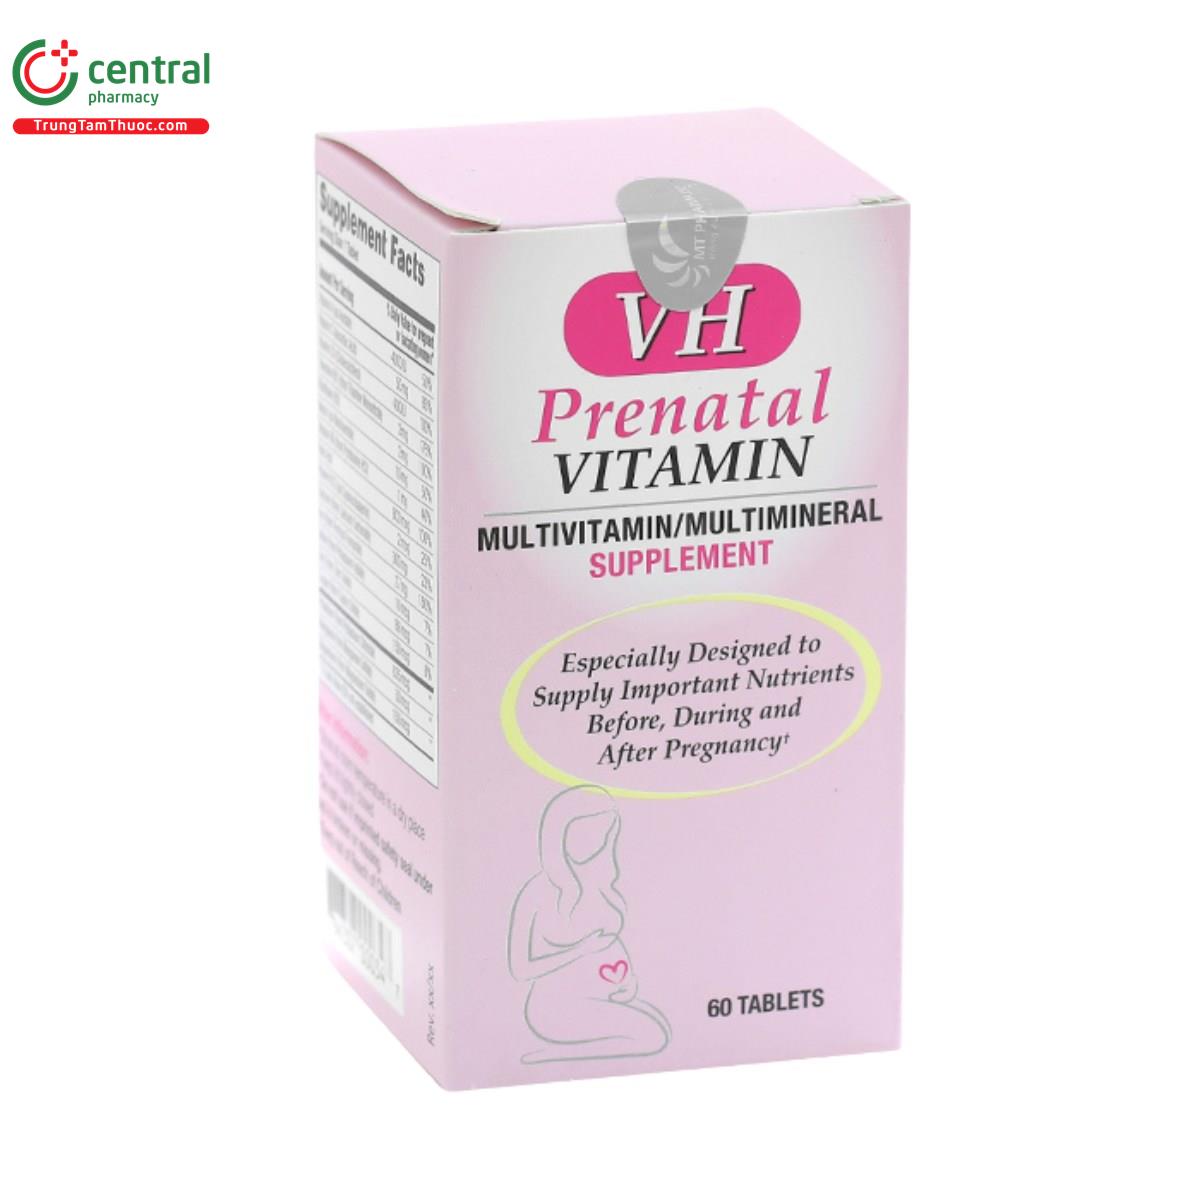 vh prenatal vitamin 3 U8447